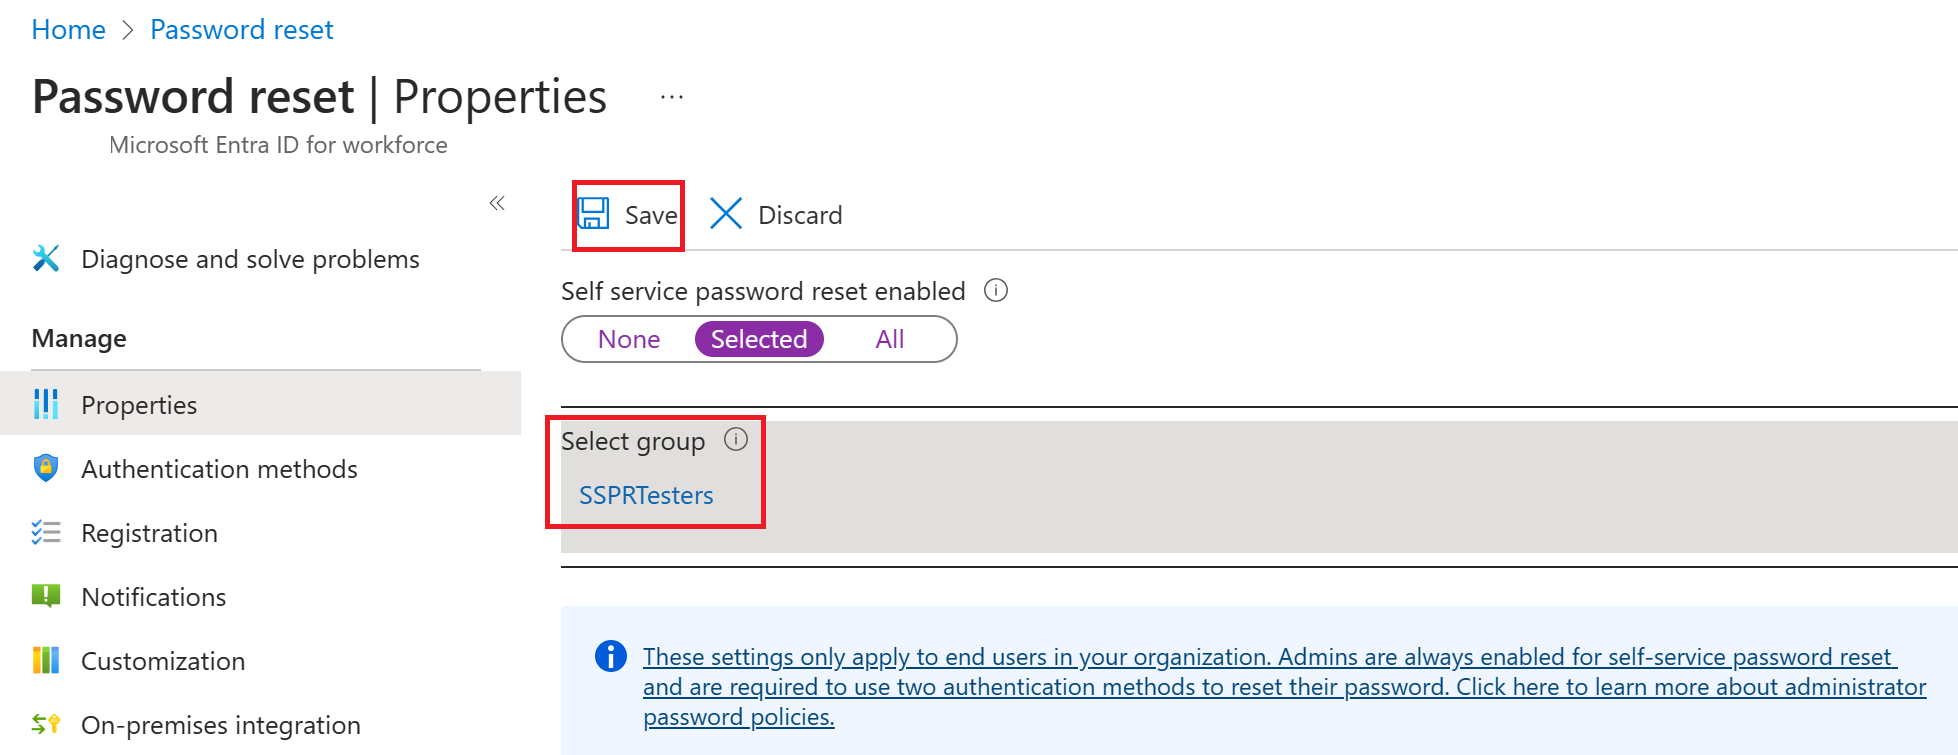 Screenshot image displaying the Password reset properties page.